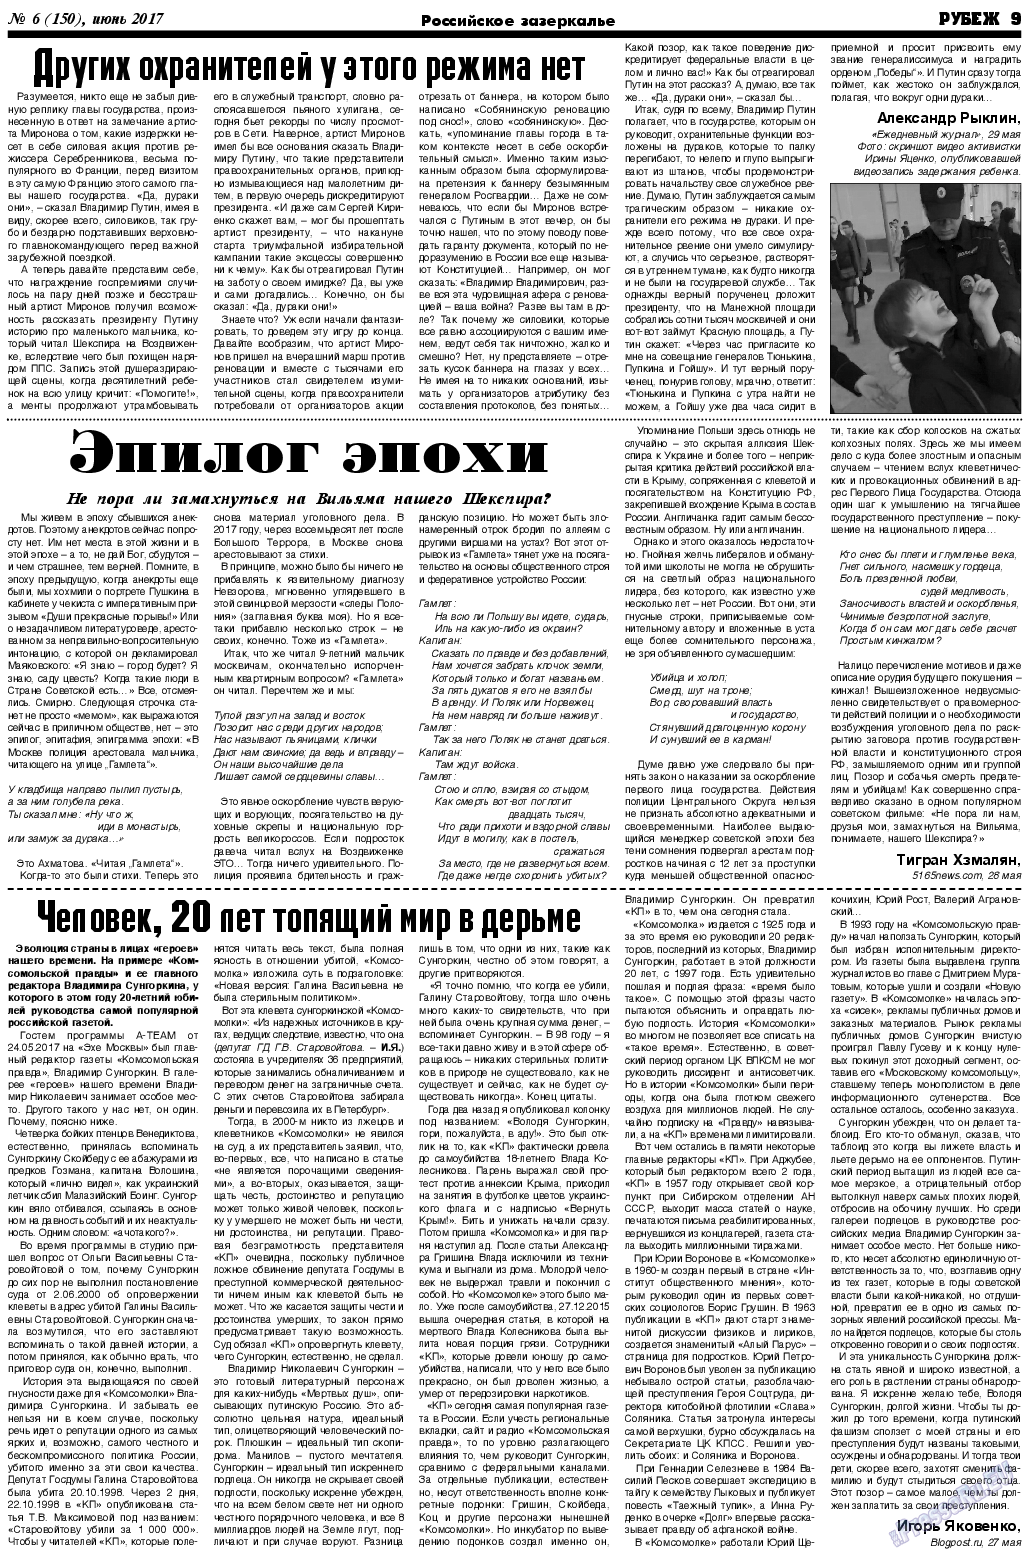 Рубеж, газета. 2017 №6 стр.9